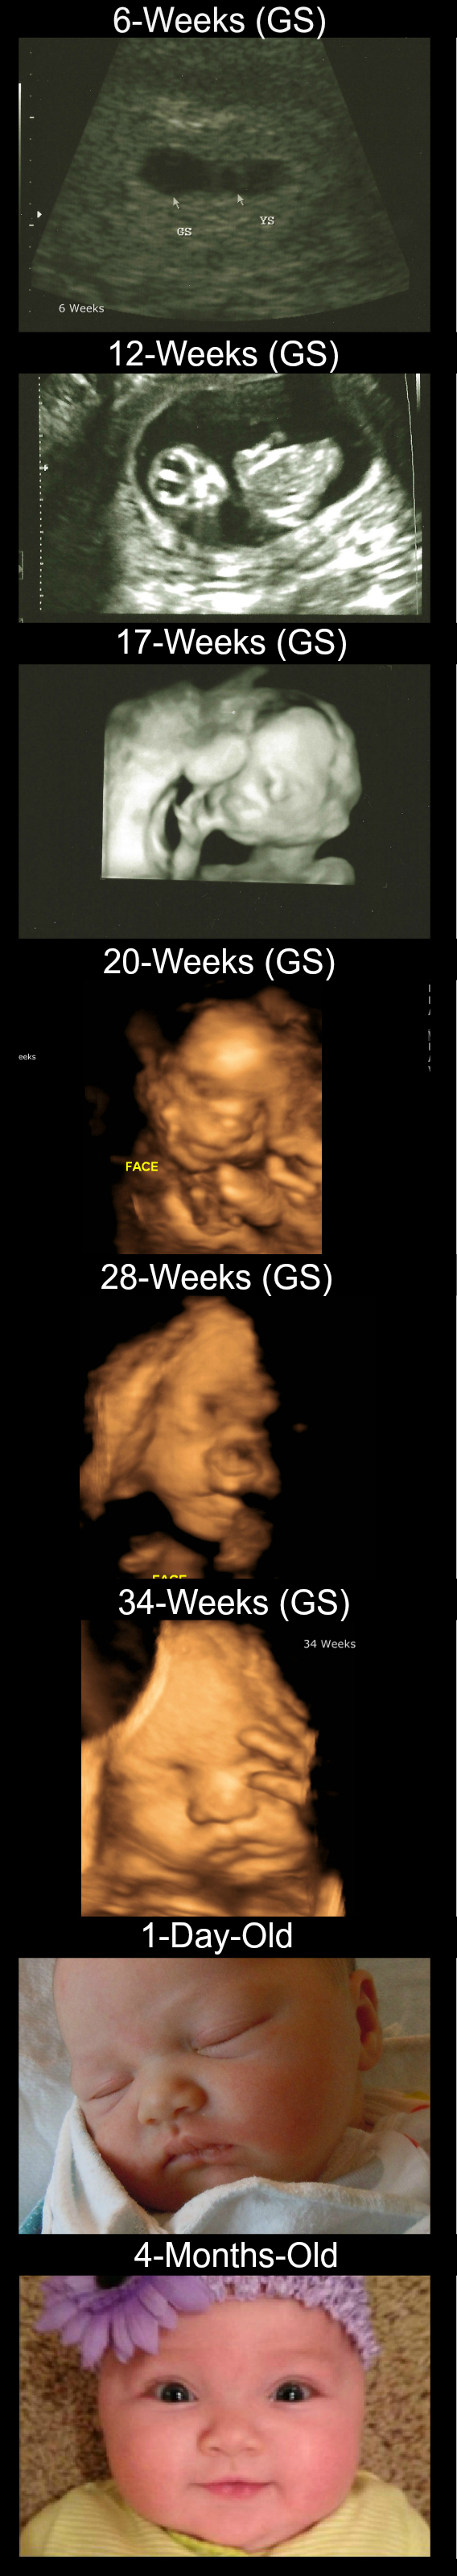 3D Ultrasound Pregnancy to Baby Timeline